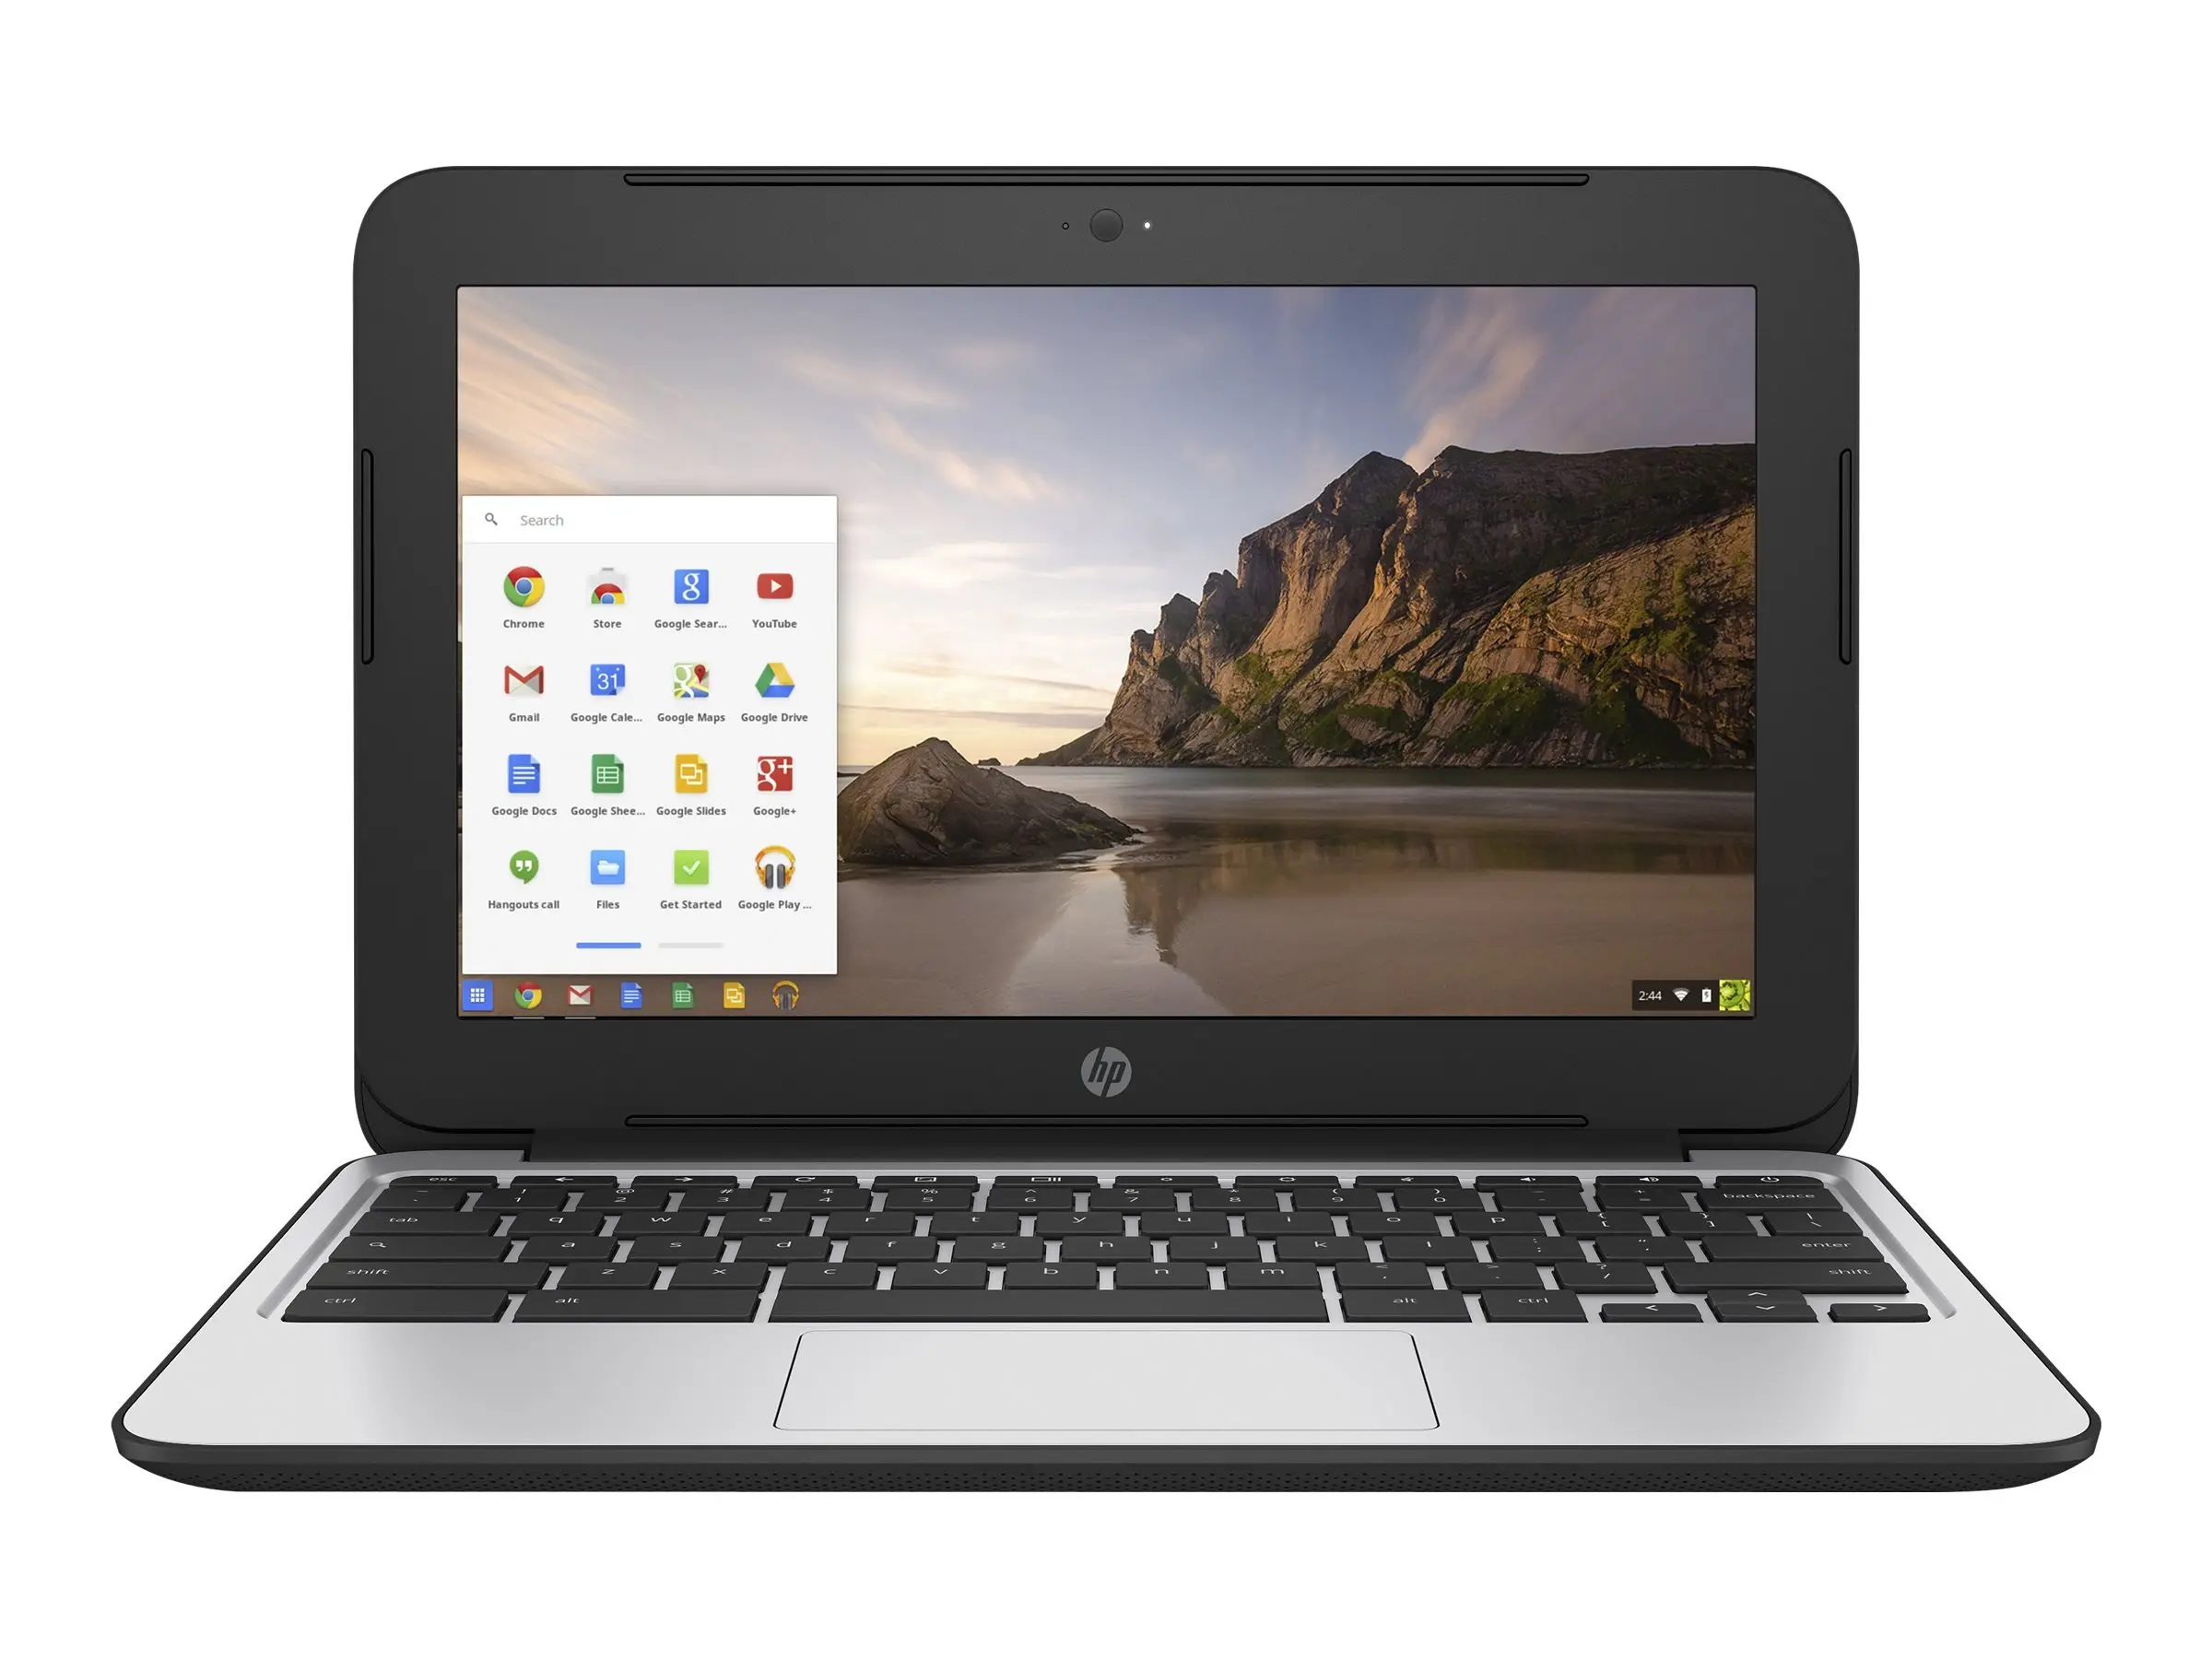 hewlett packard m 11g4 - How to install Linux on HP Chromebook 11 G4